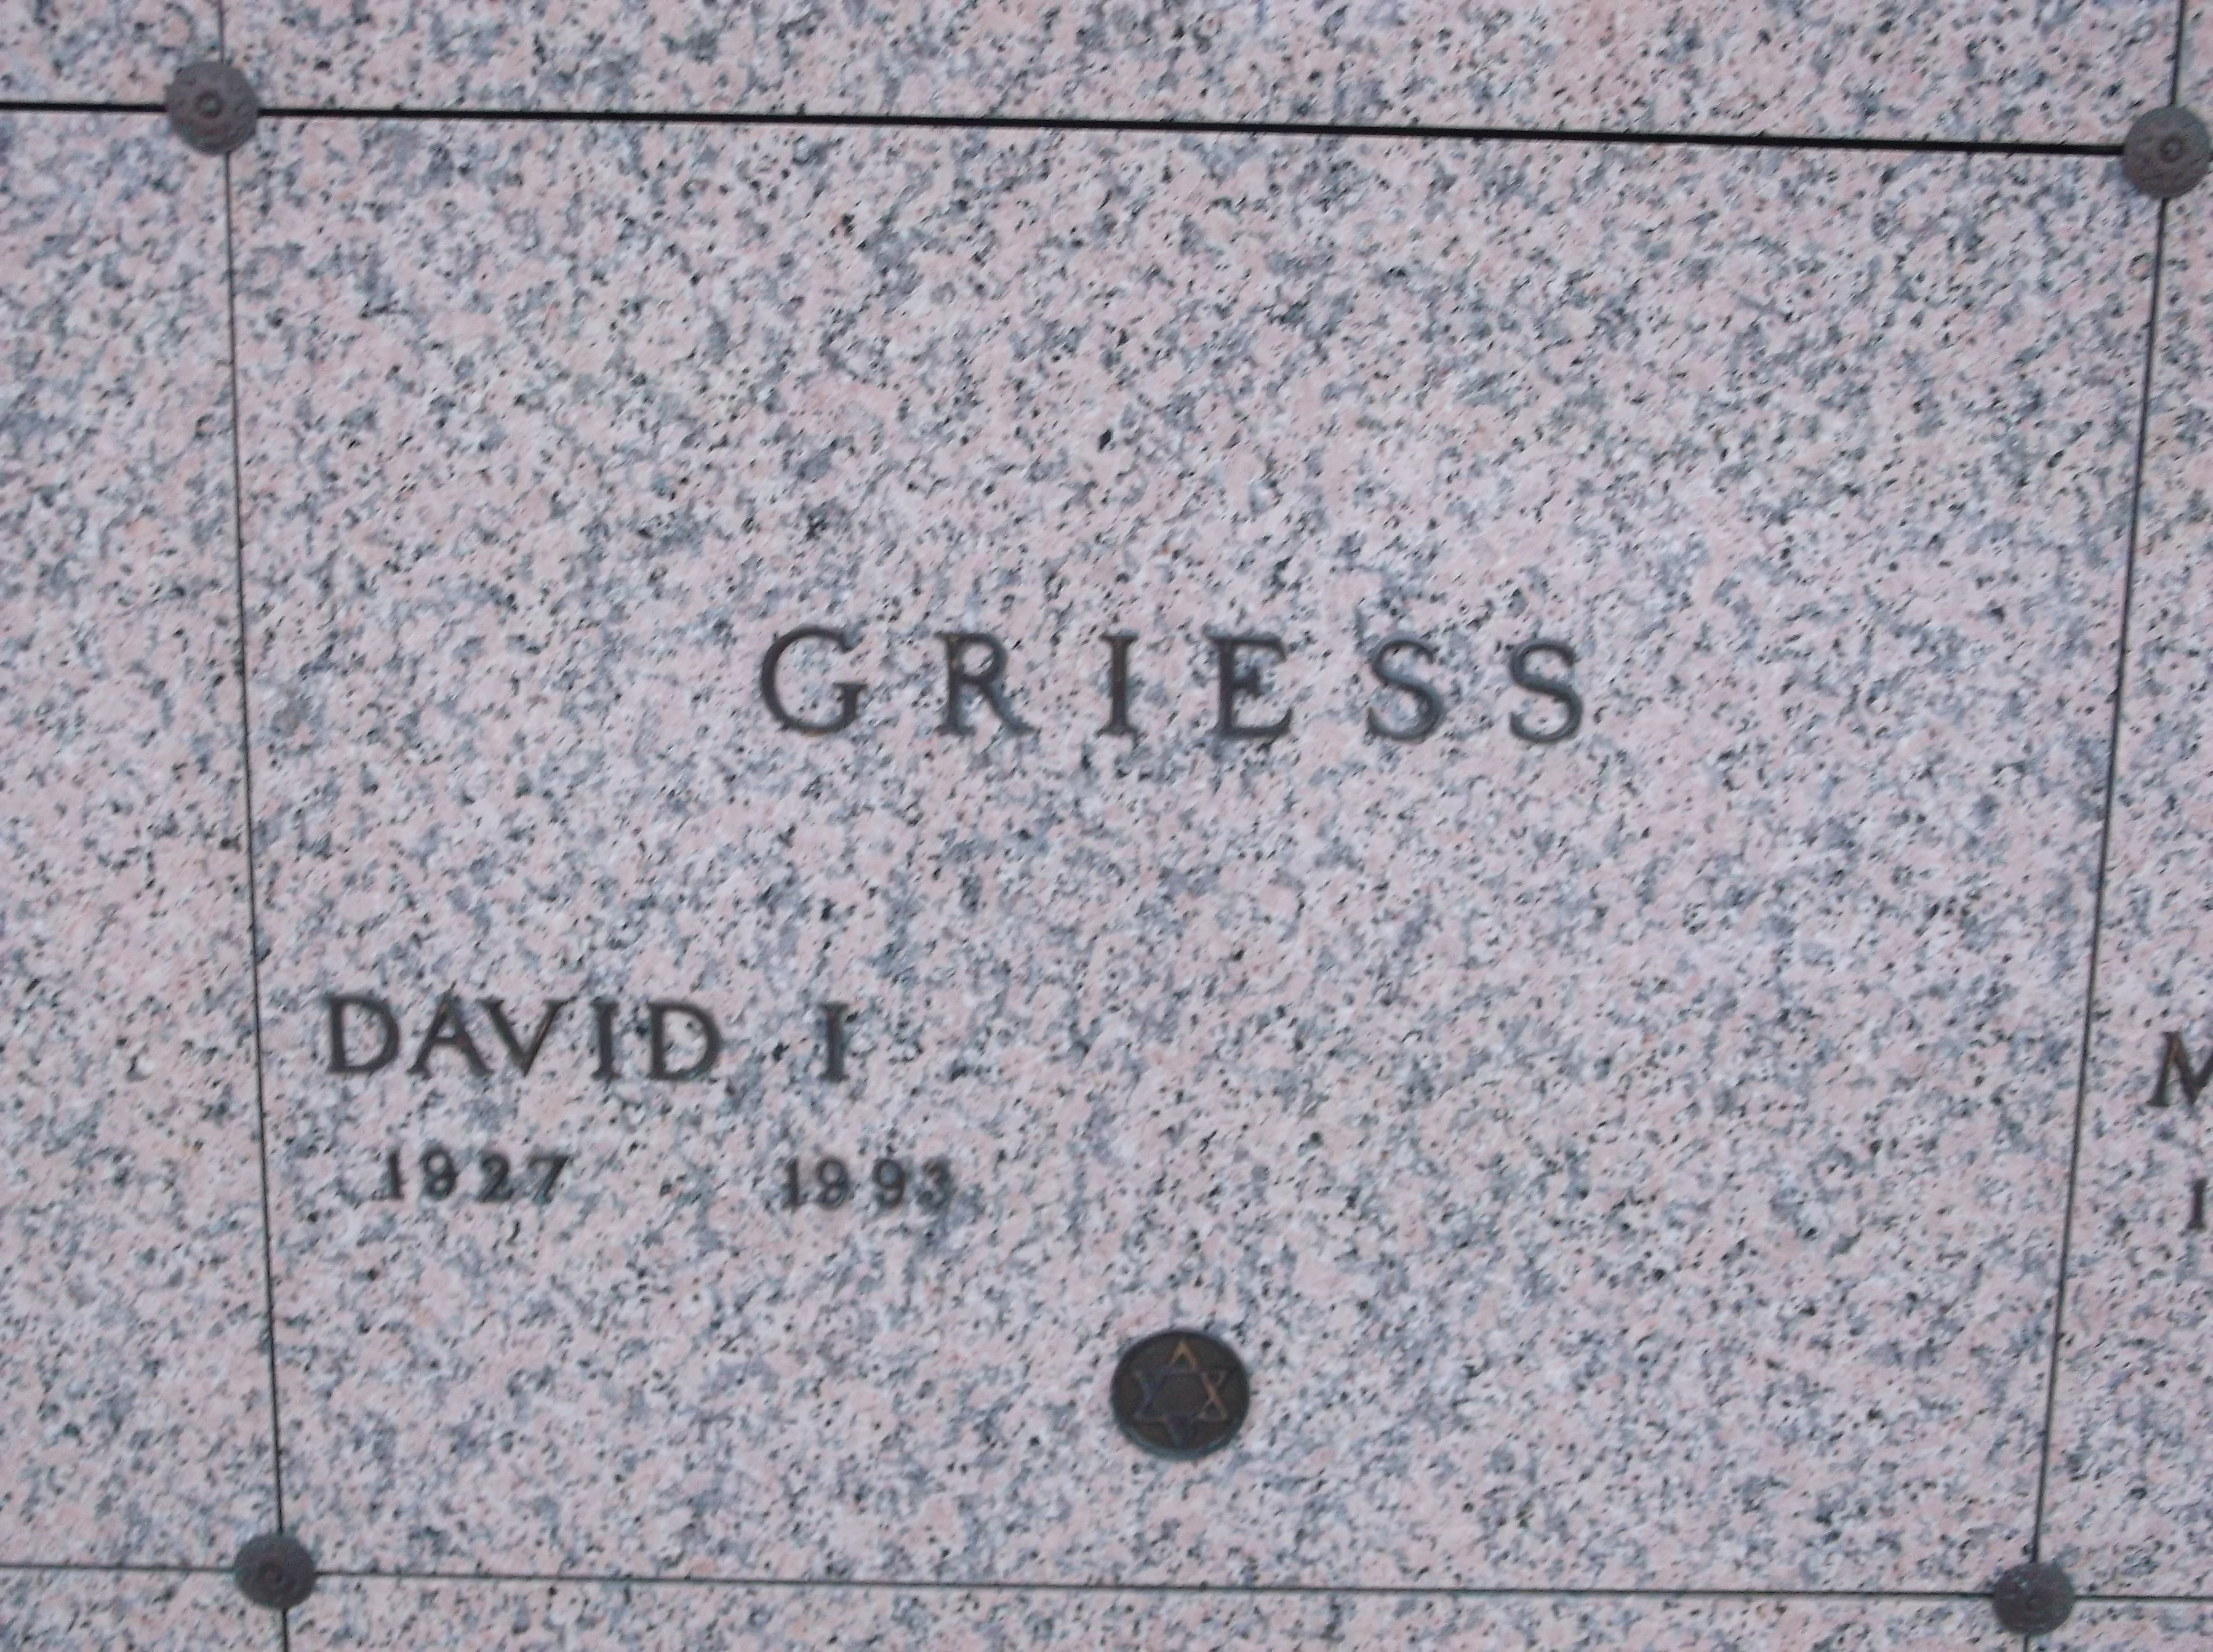 David I Griess